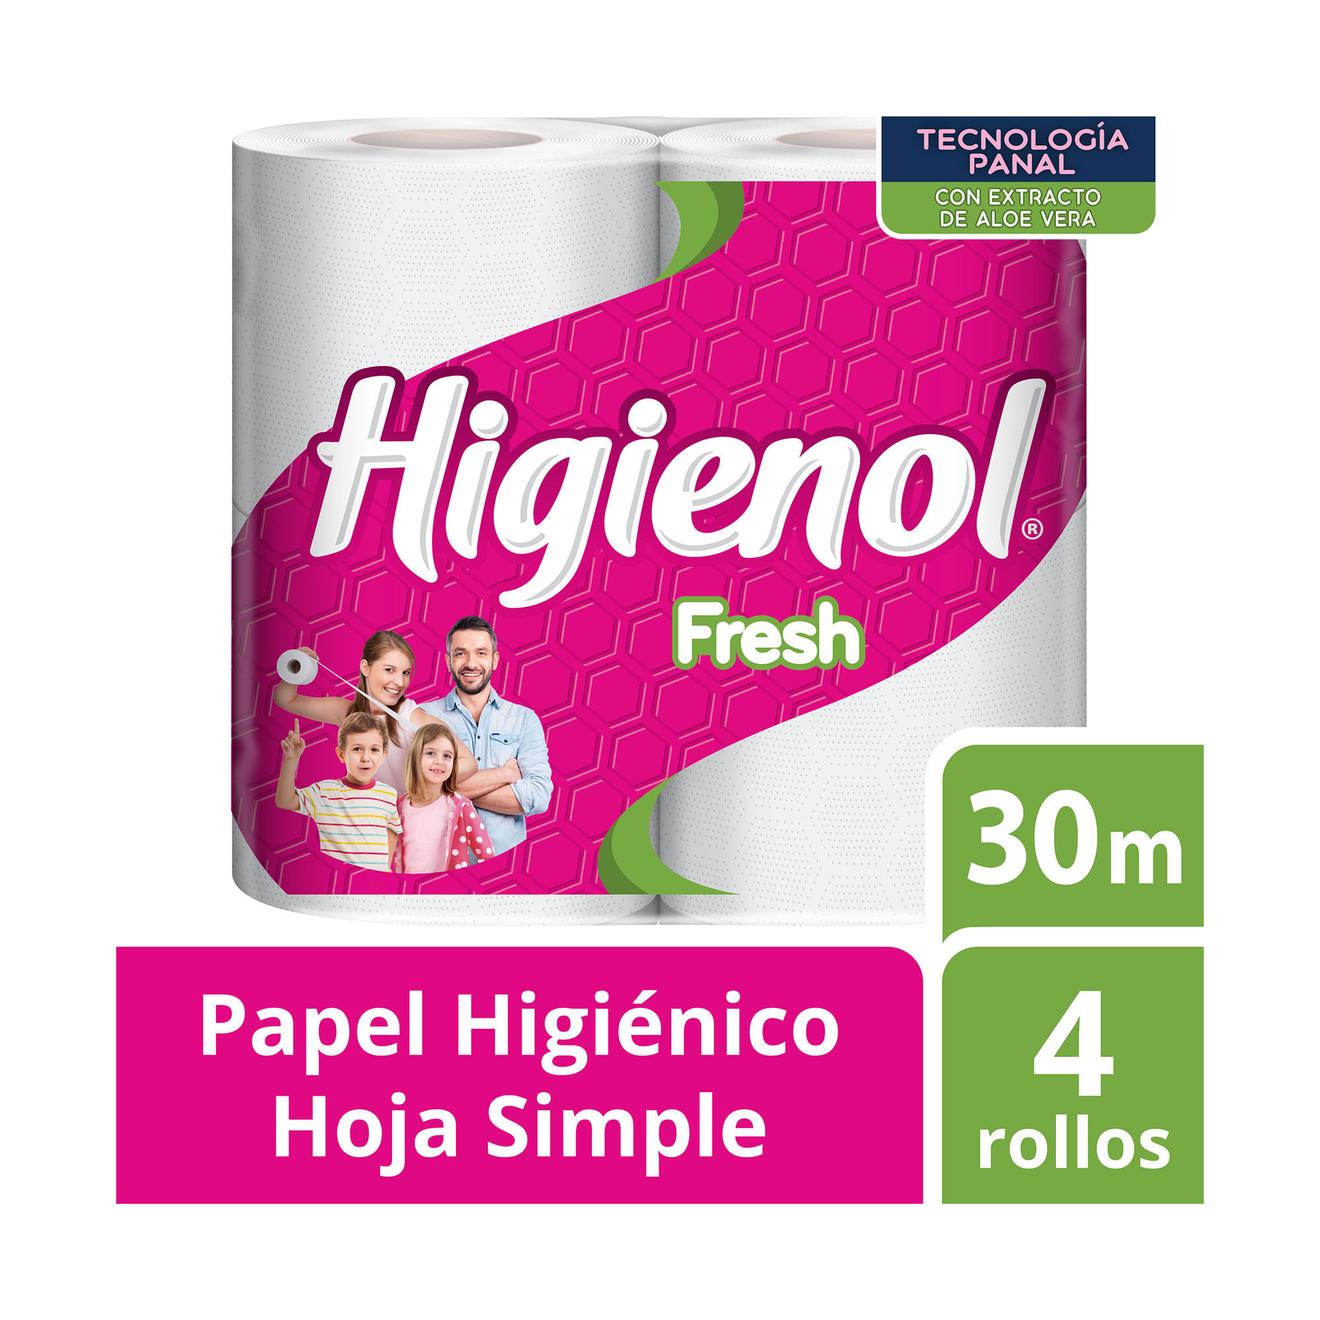 Oferta de Papel higiénico Higienol hoja simple fresh aloe x4 30 mts. por $1410 en Carrefour